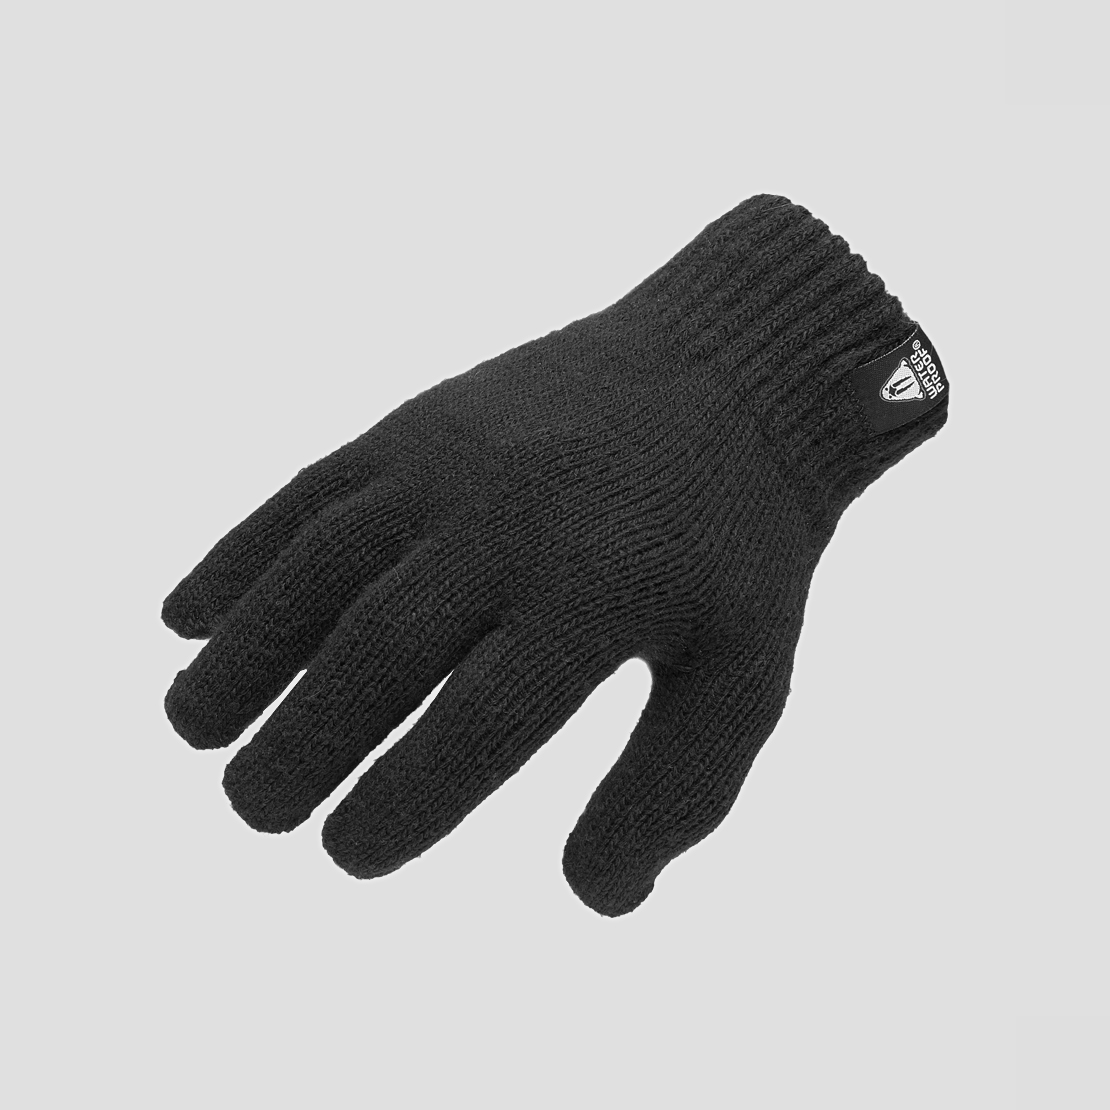 Waterproof Dry Glove HD short